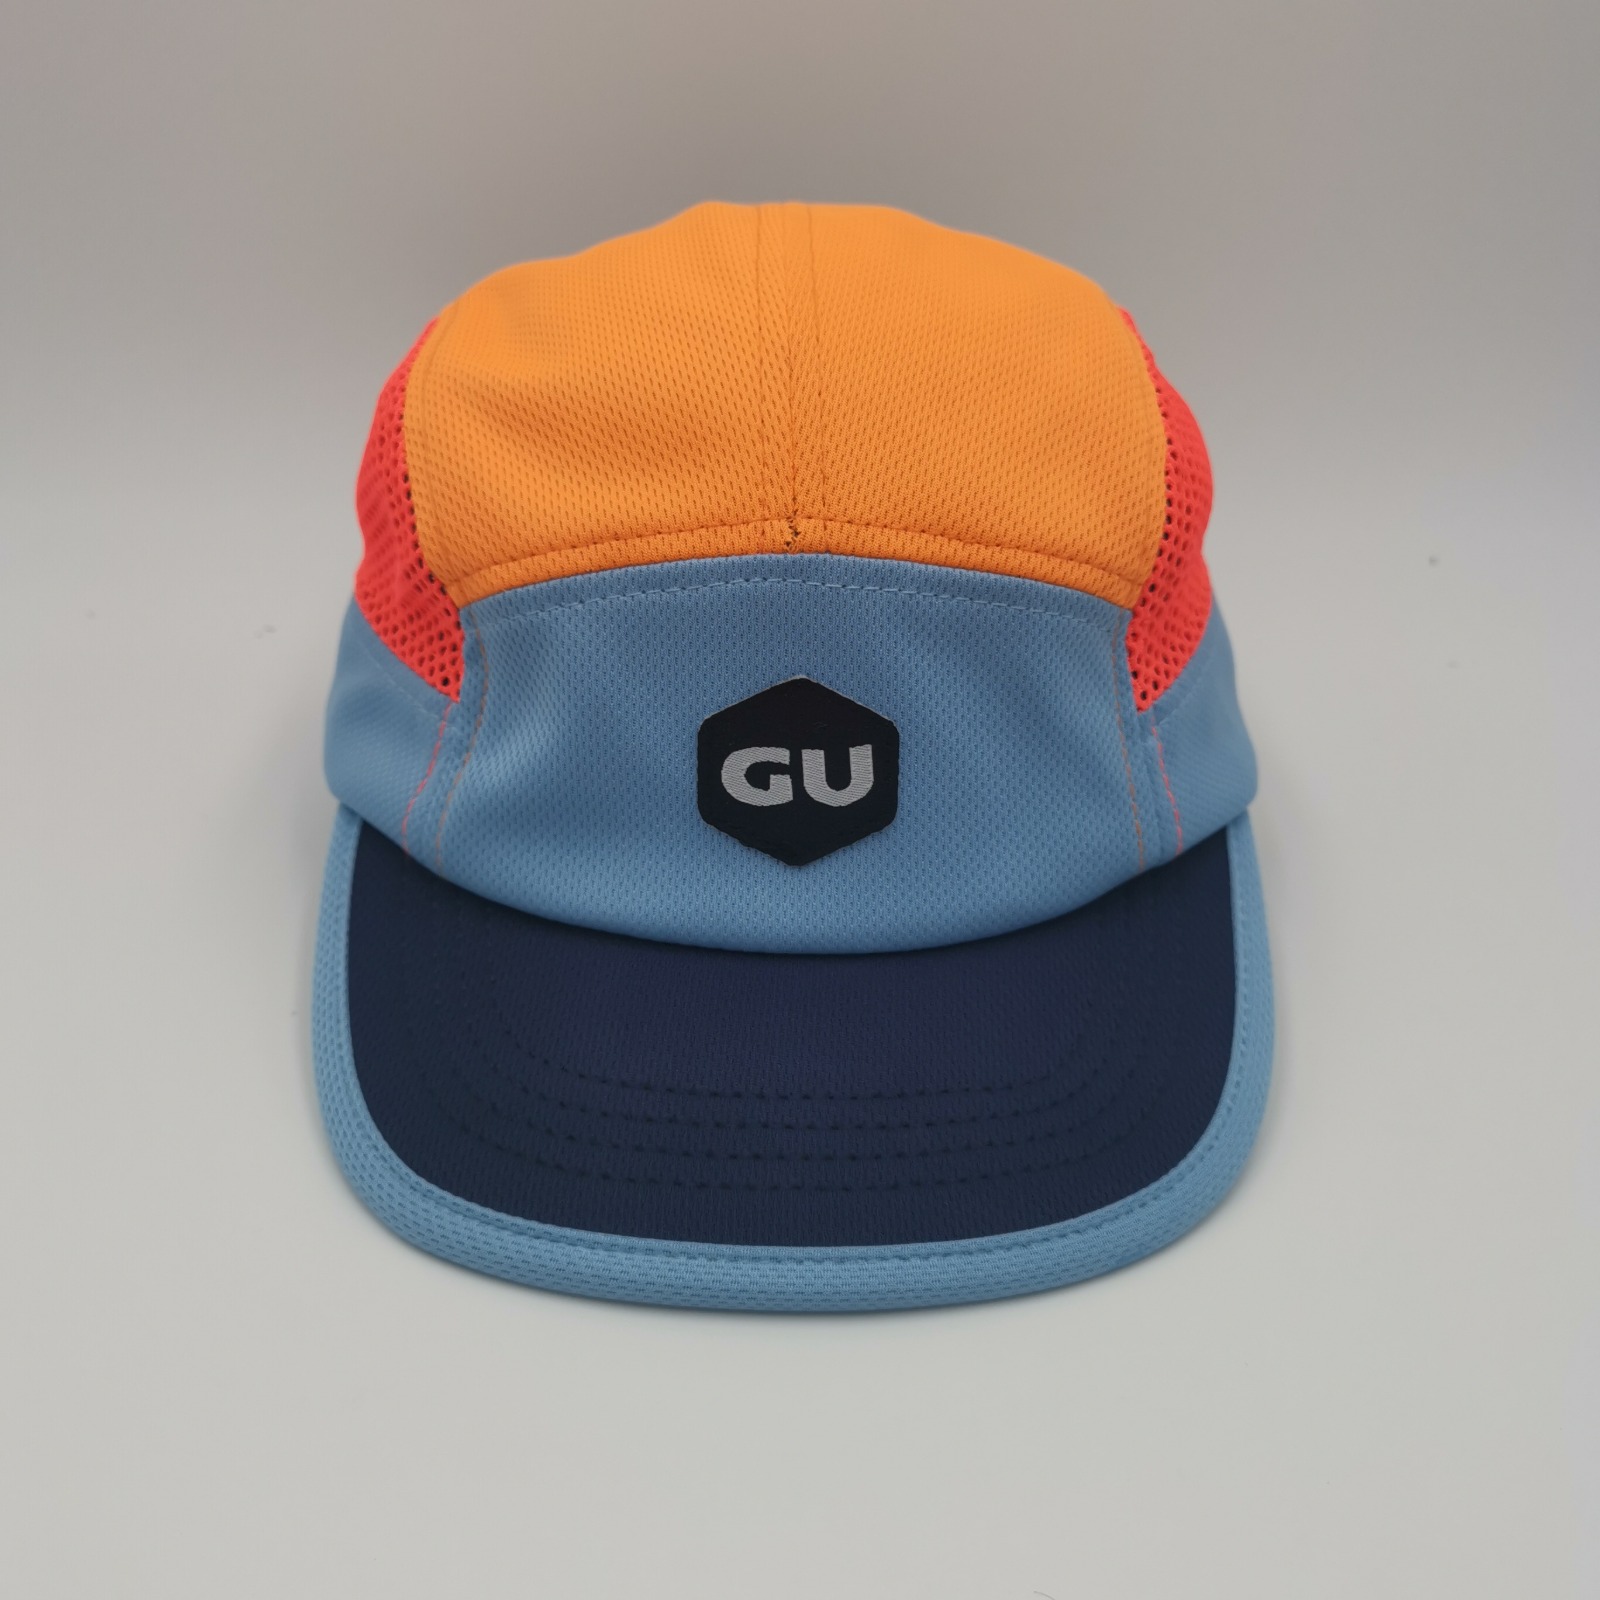 GU Running Cap – GU Energy